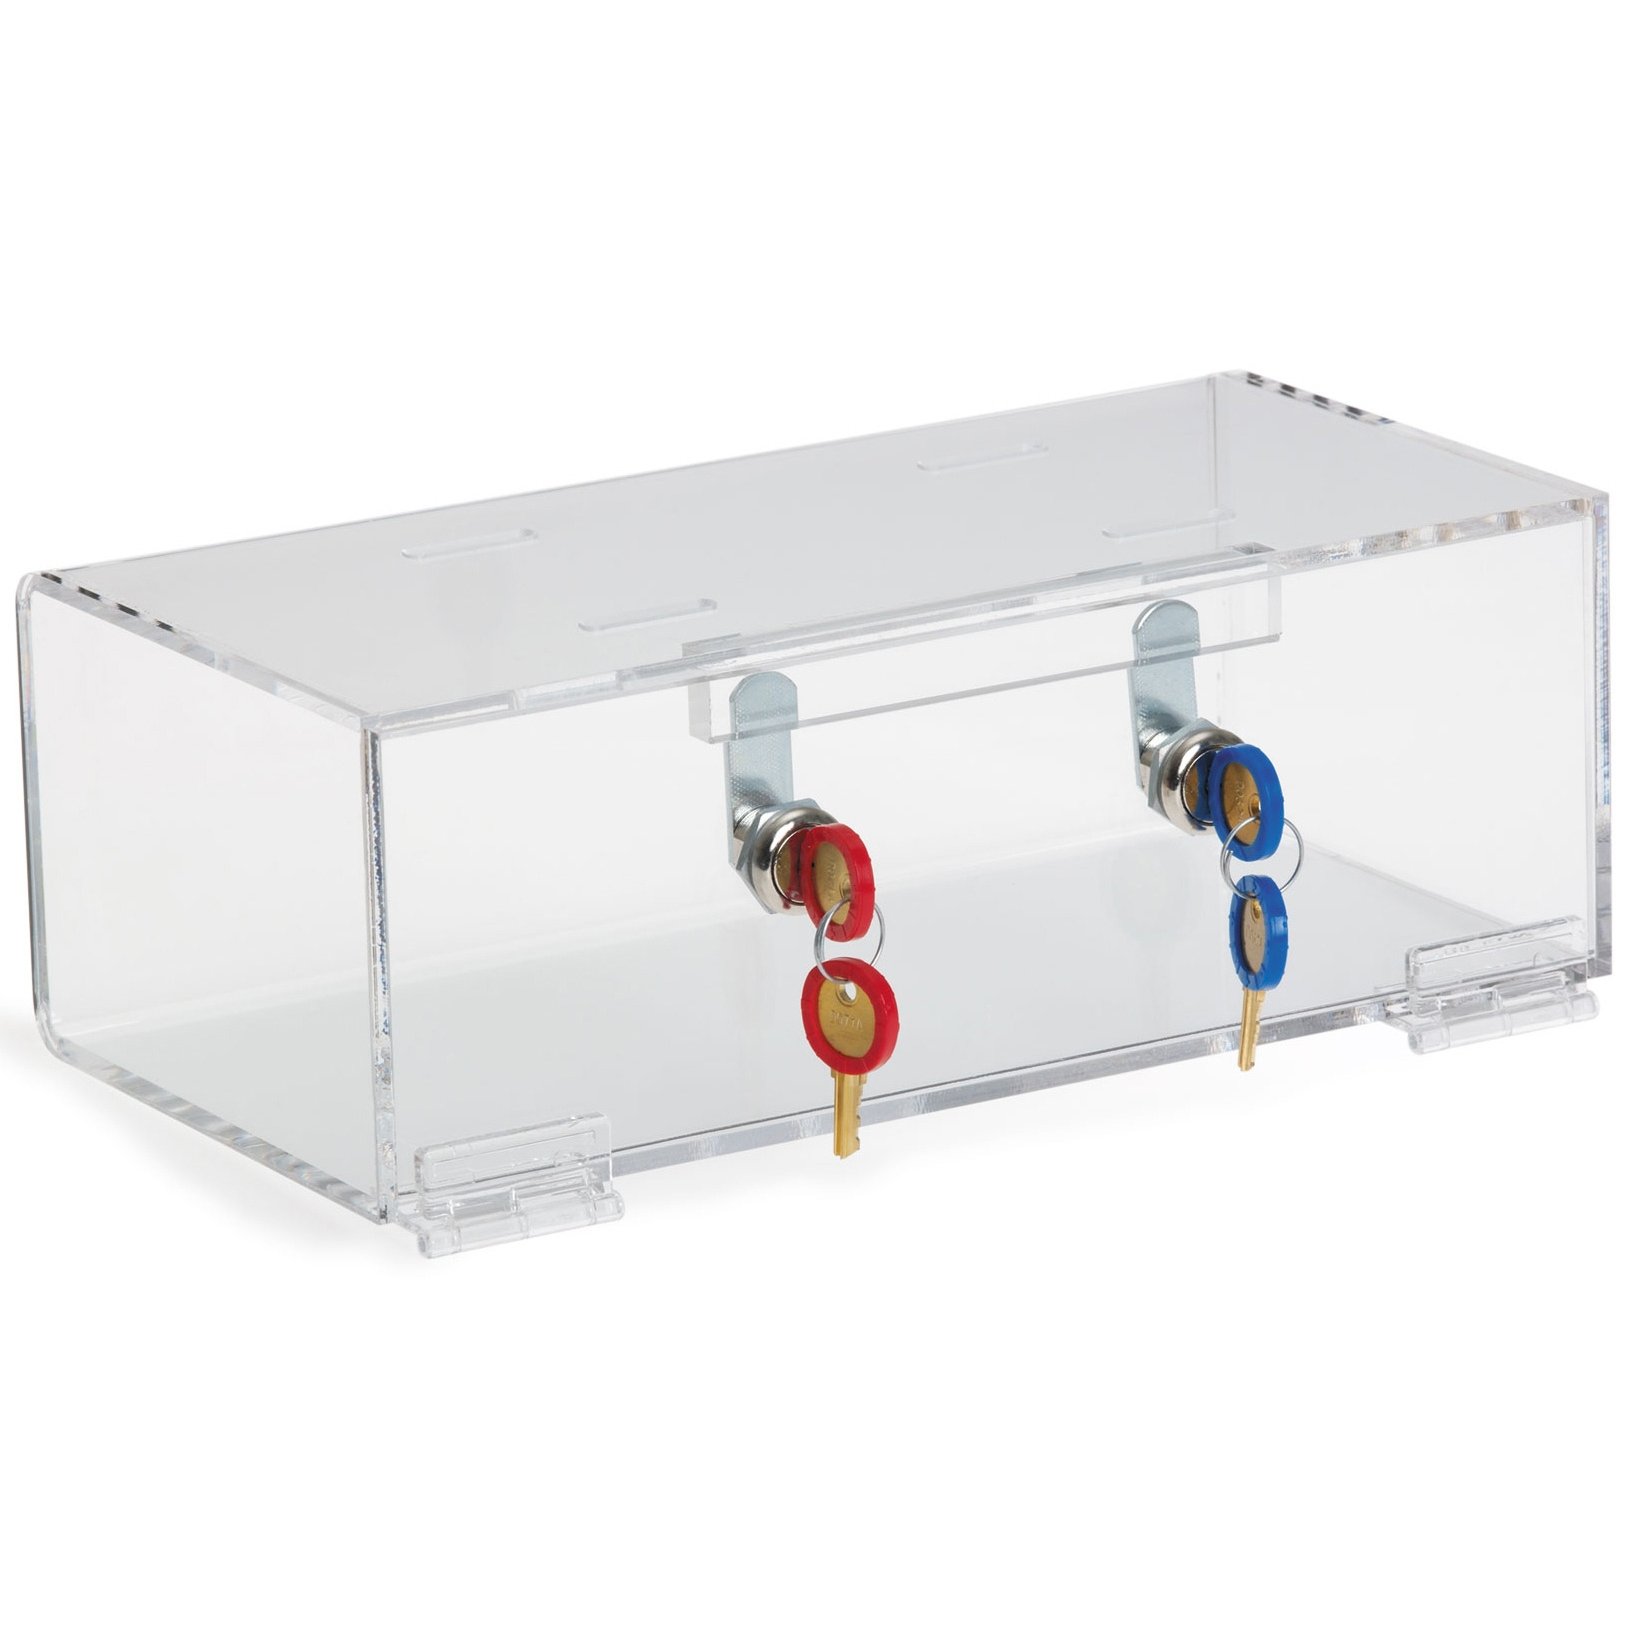 OmniMed 183002 Clear Acrylic Refrigerator Lock Box with Double Key Lock